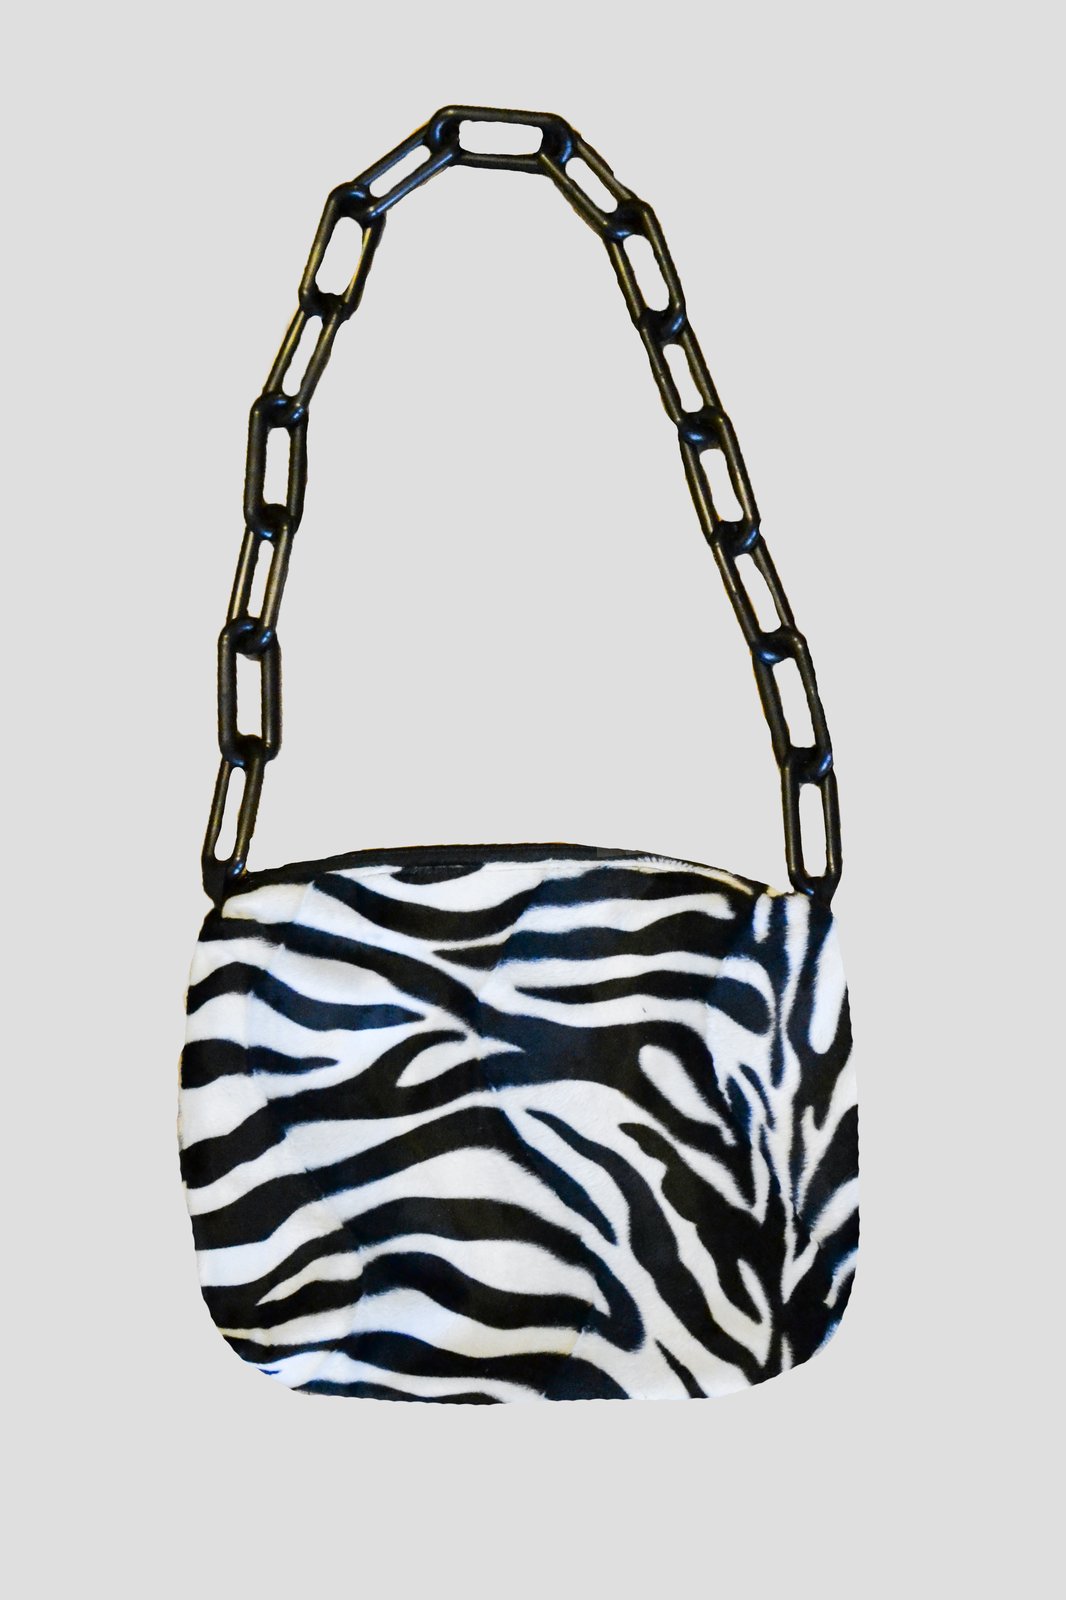 Handmade Pink Zebra handbag purse - Gem